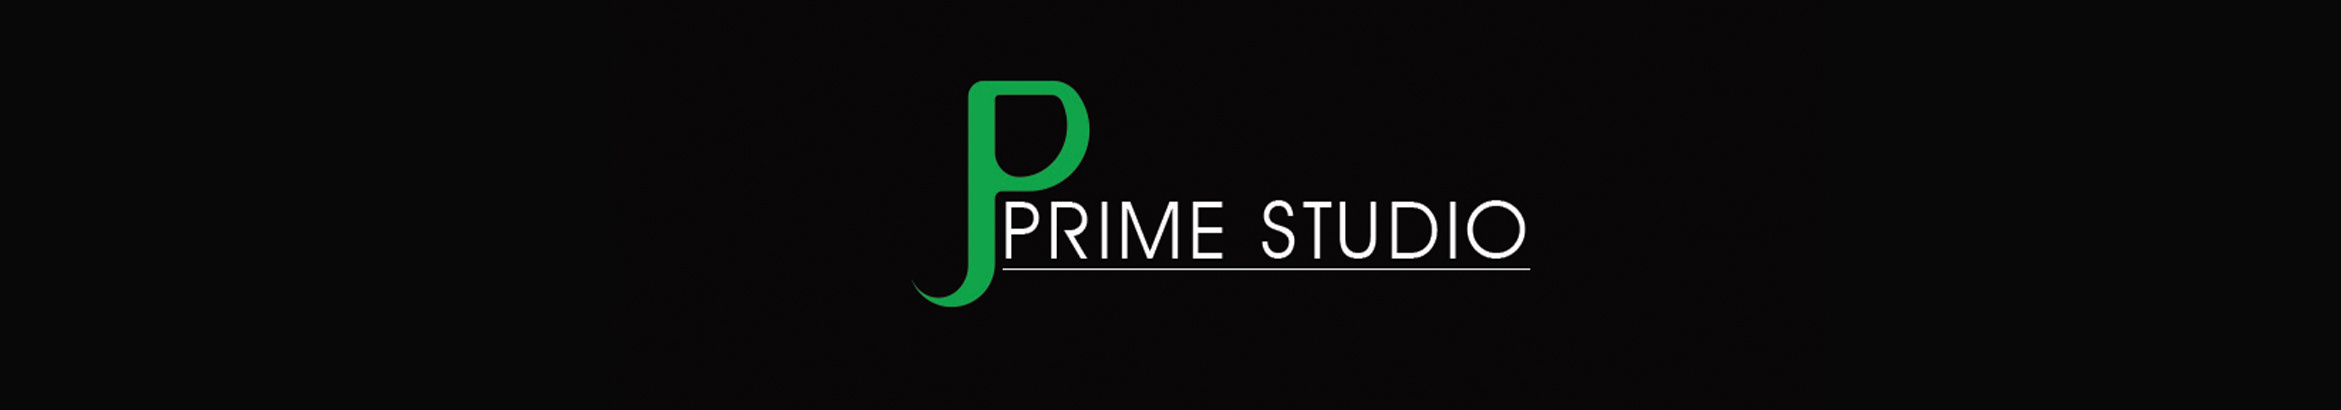 Prime Studios profilbanner